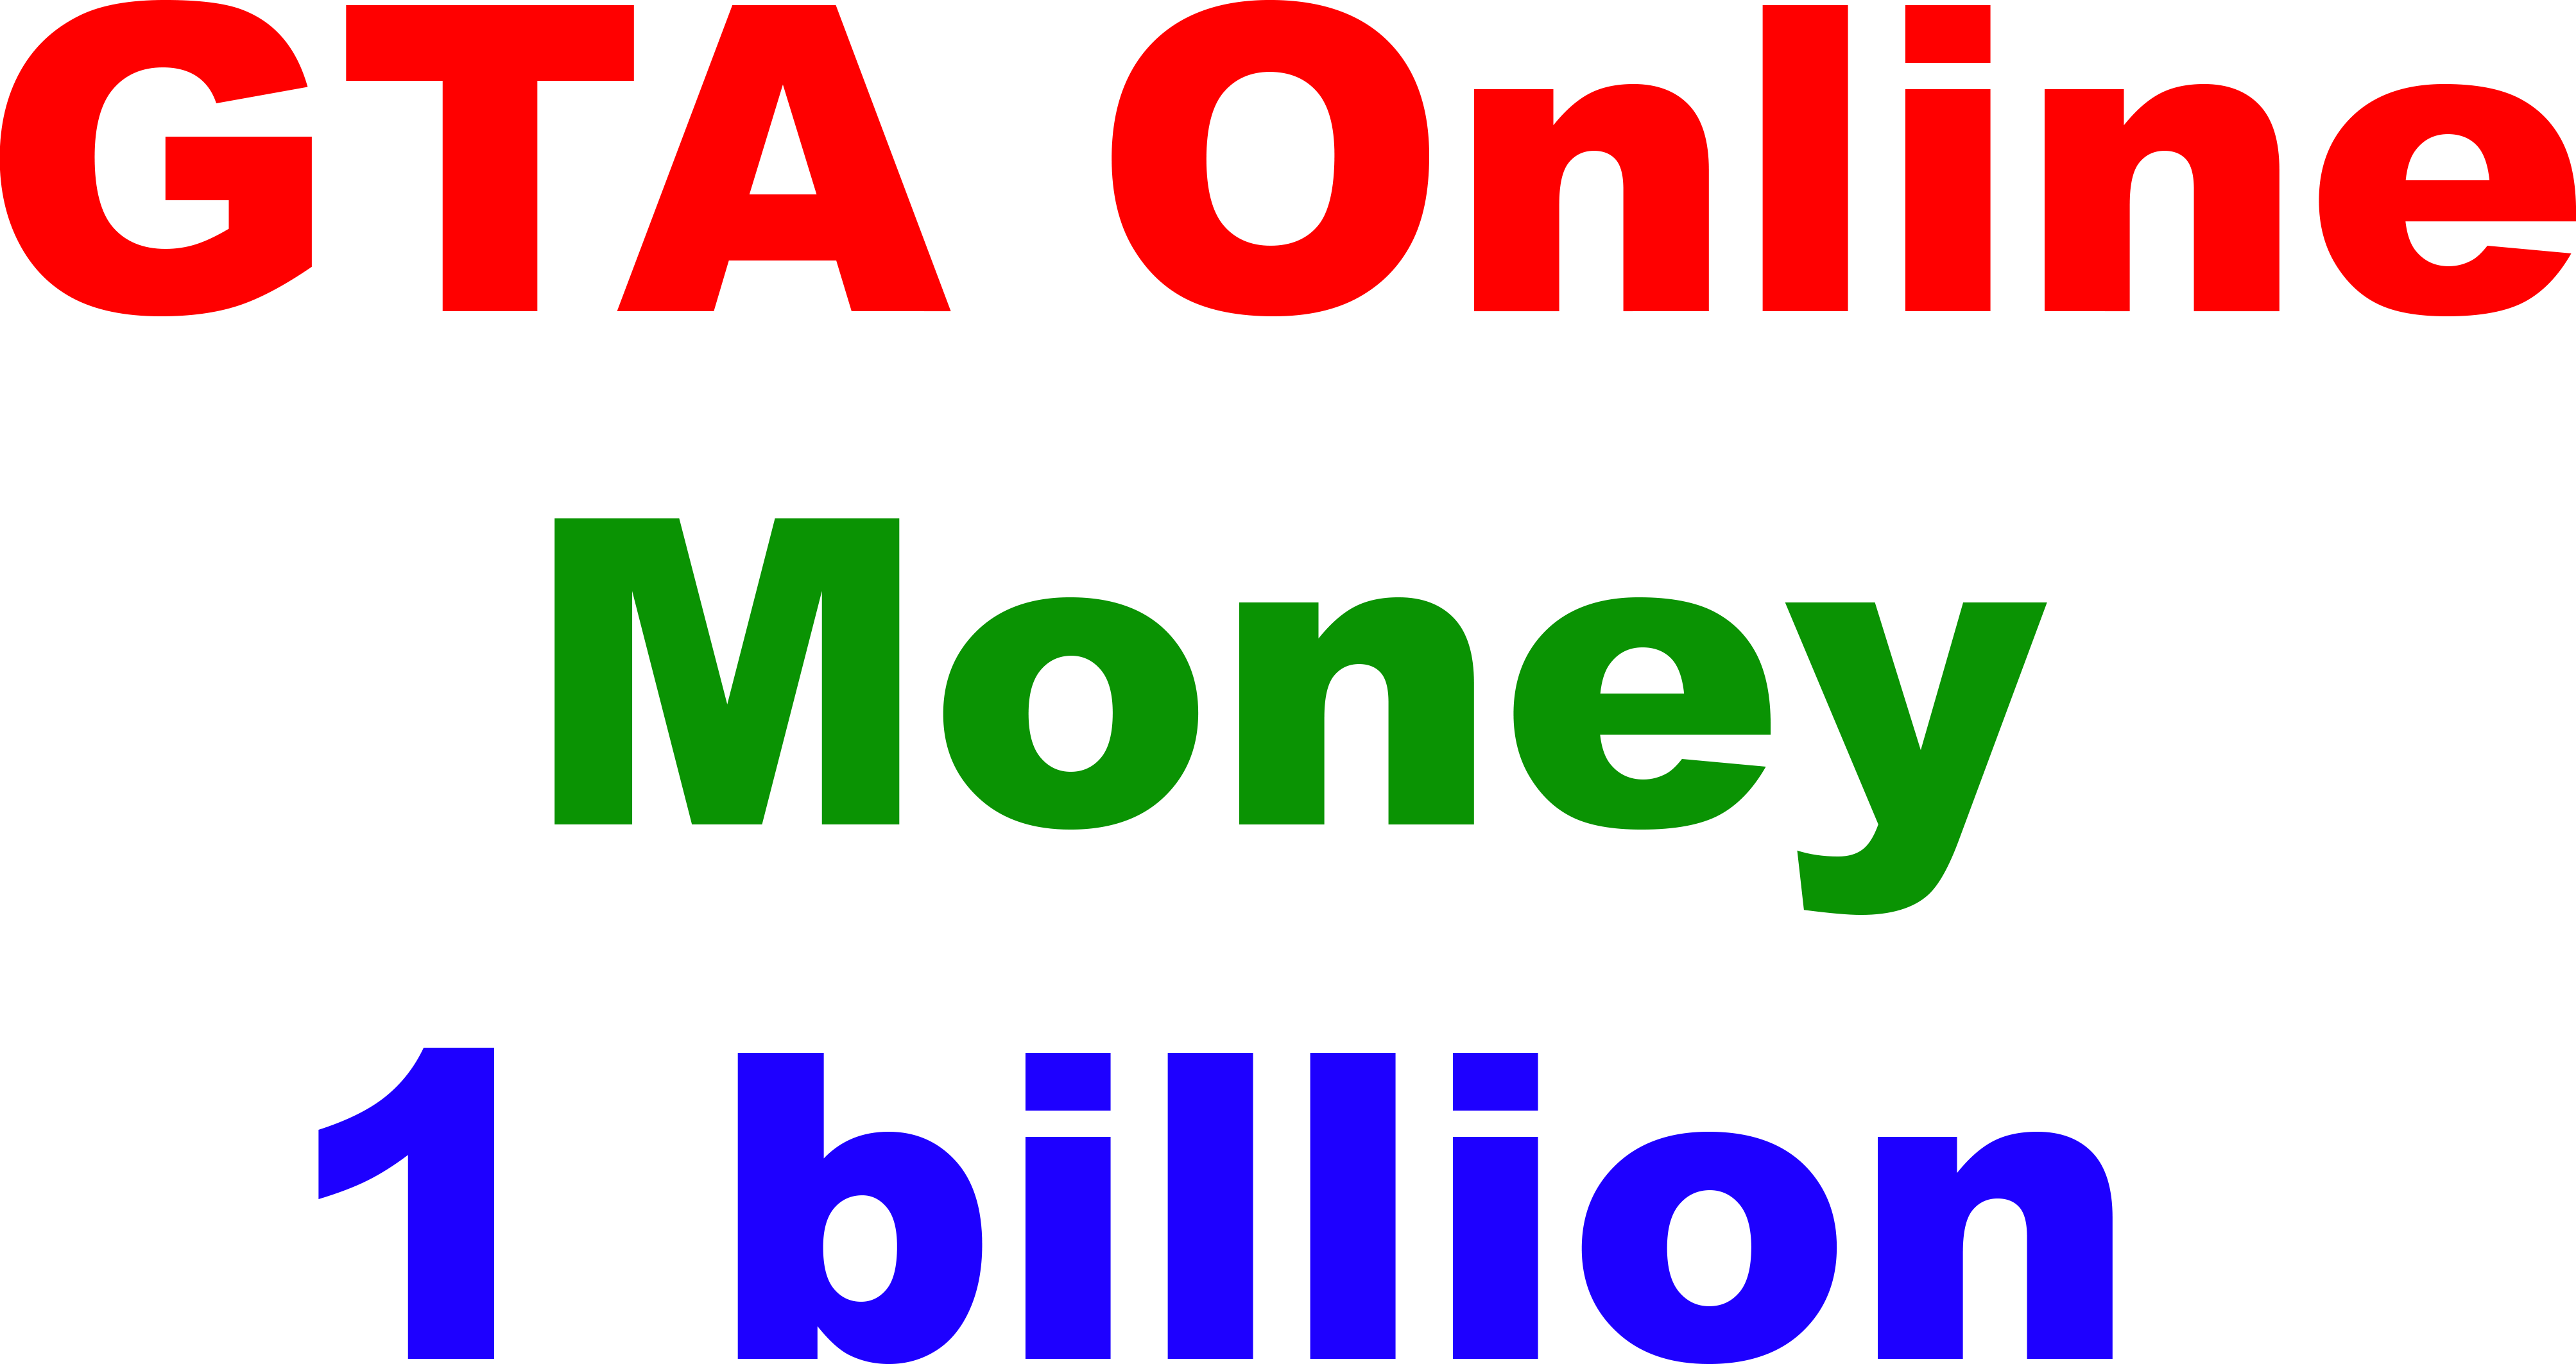 GTA Online money 1 billion PC. EGL, STEAM, RGL